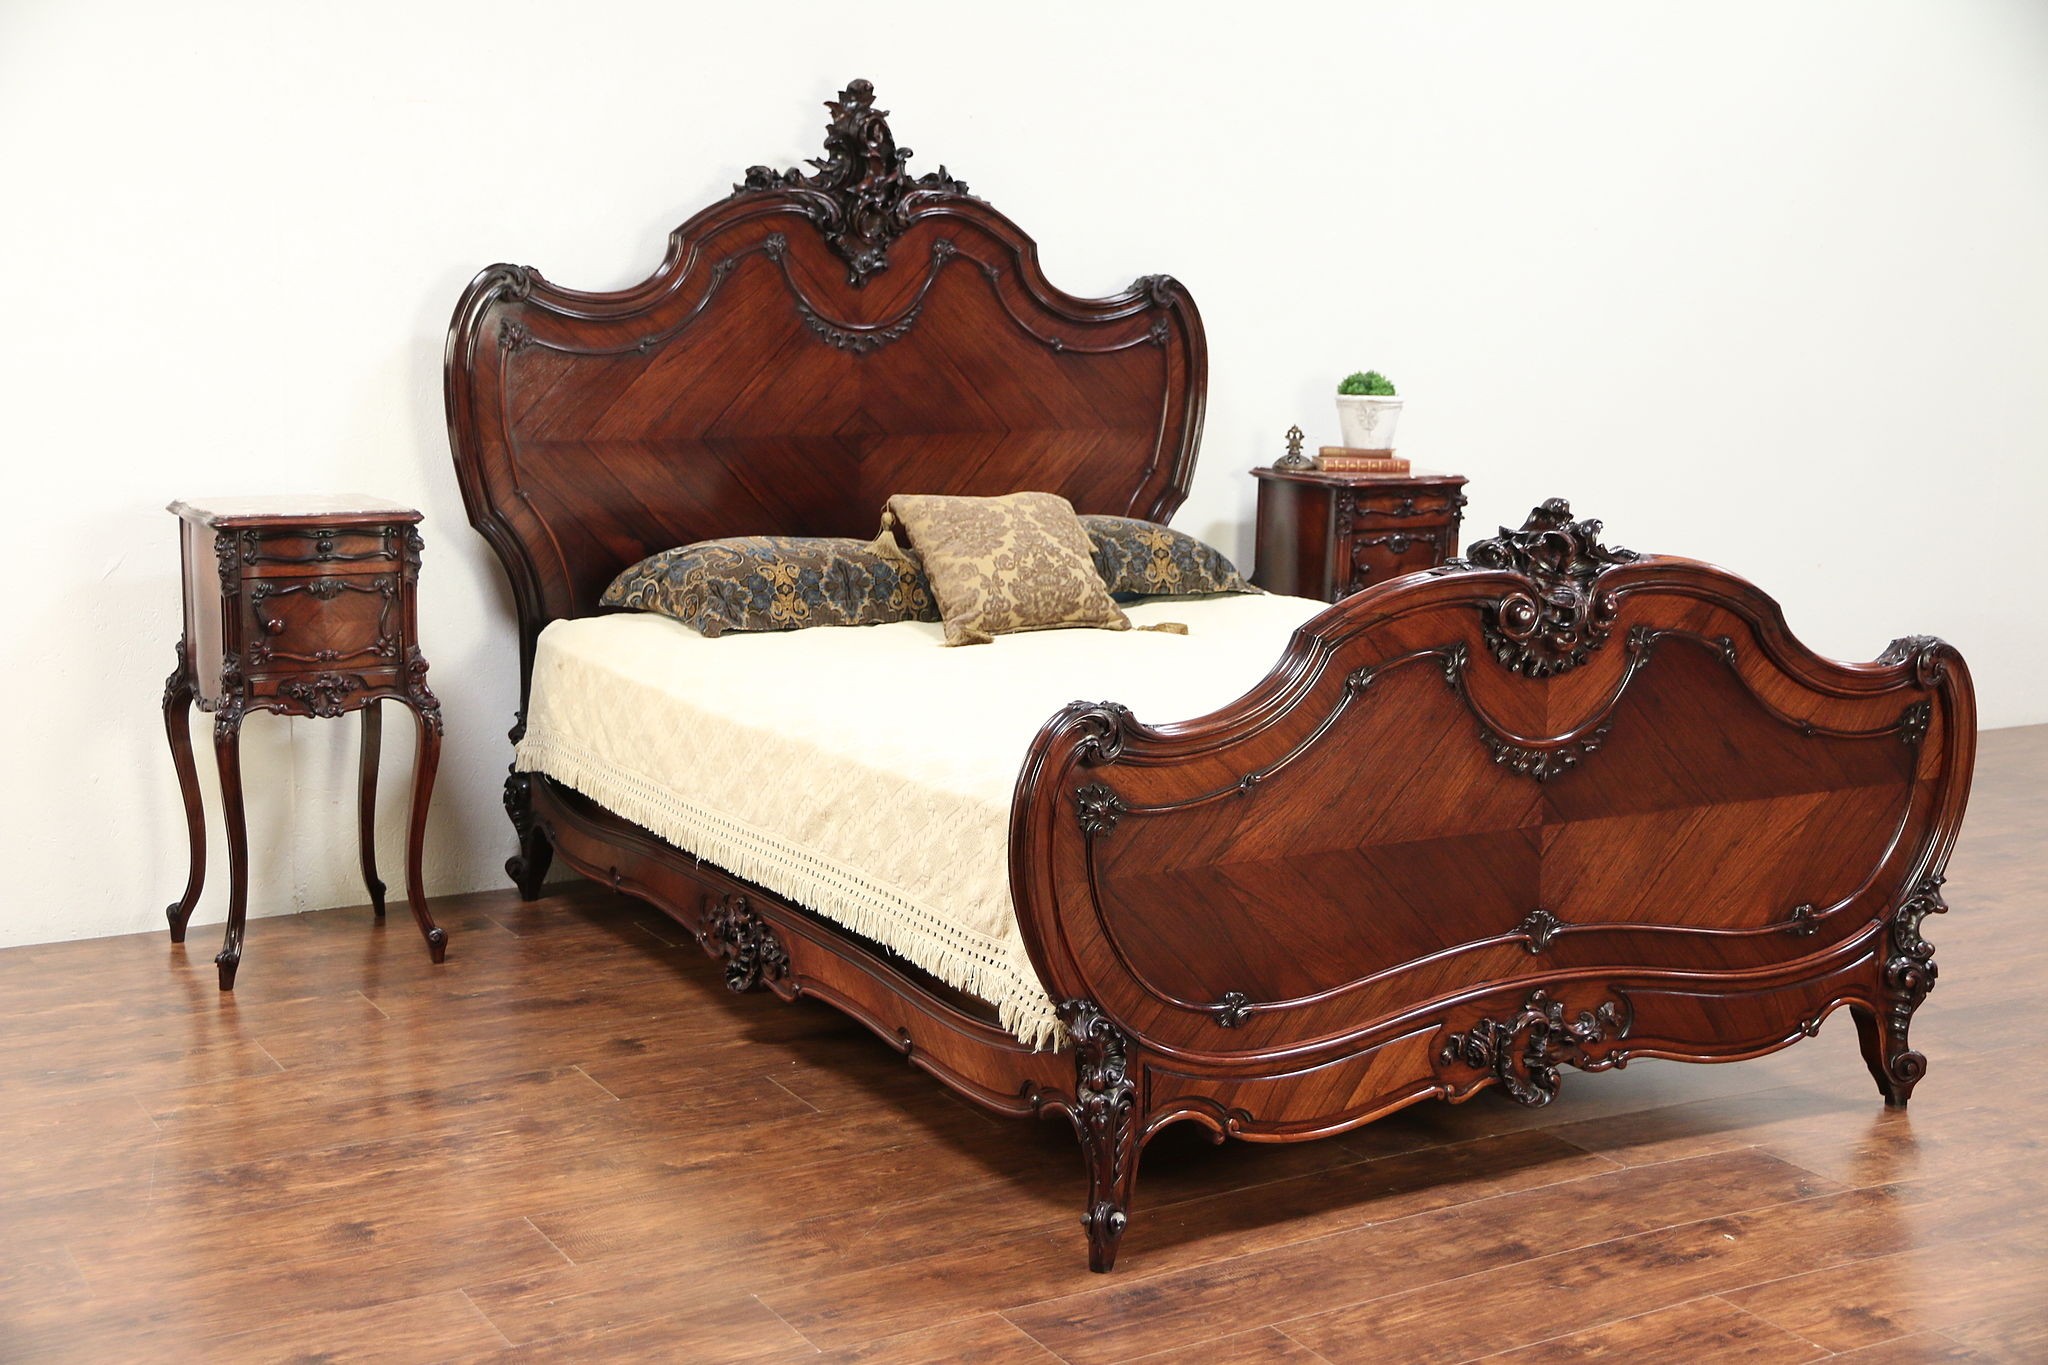 rosewood bedroom furniture used